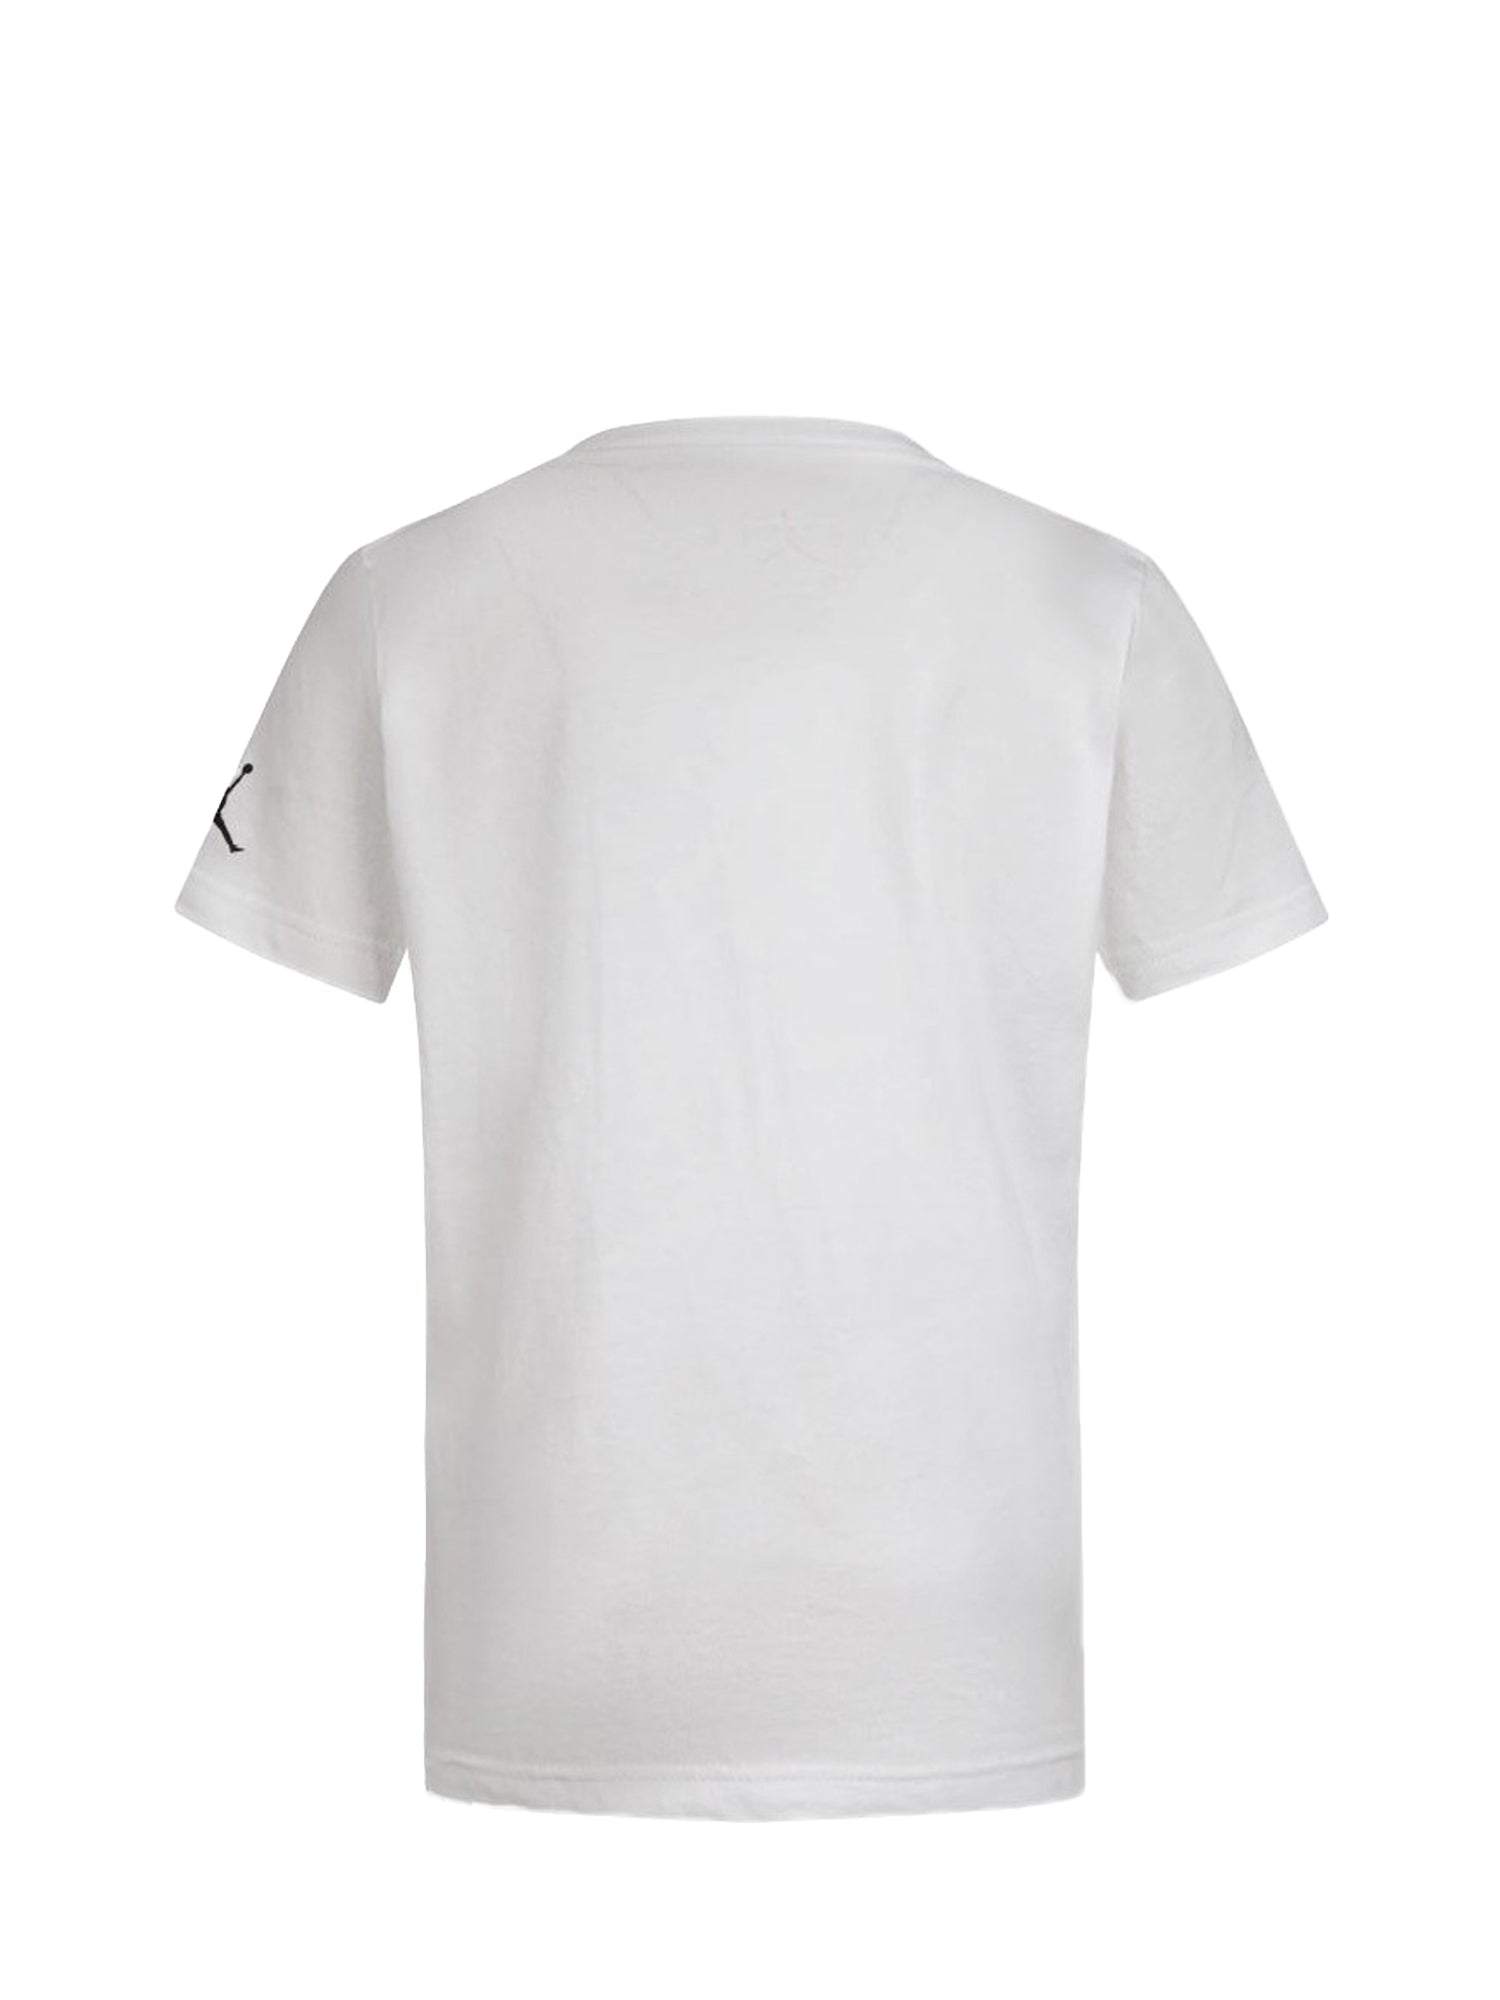 Jordan T-shirt Bianco